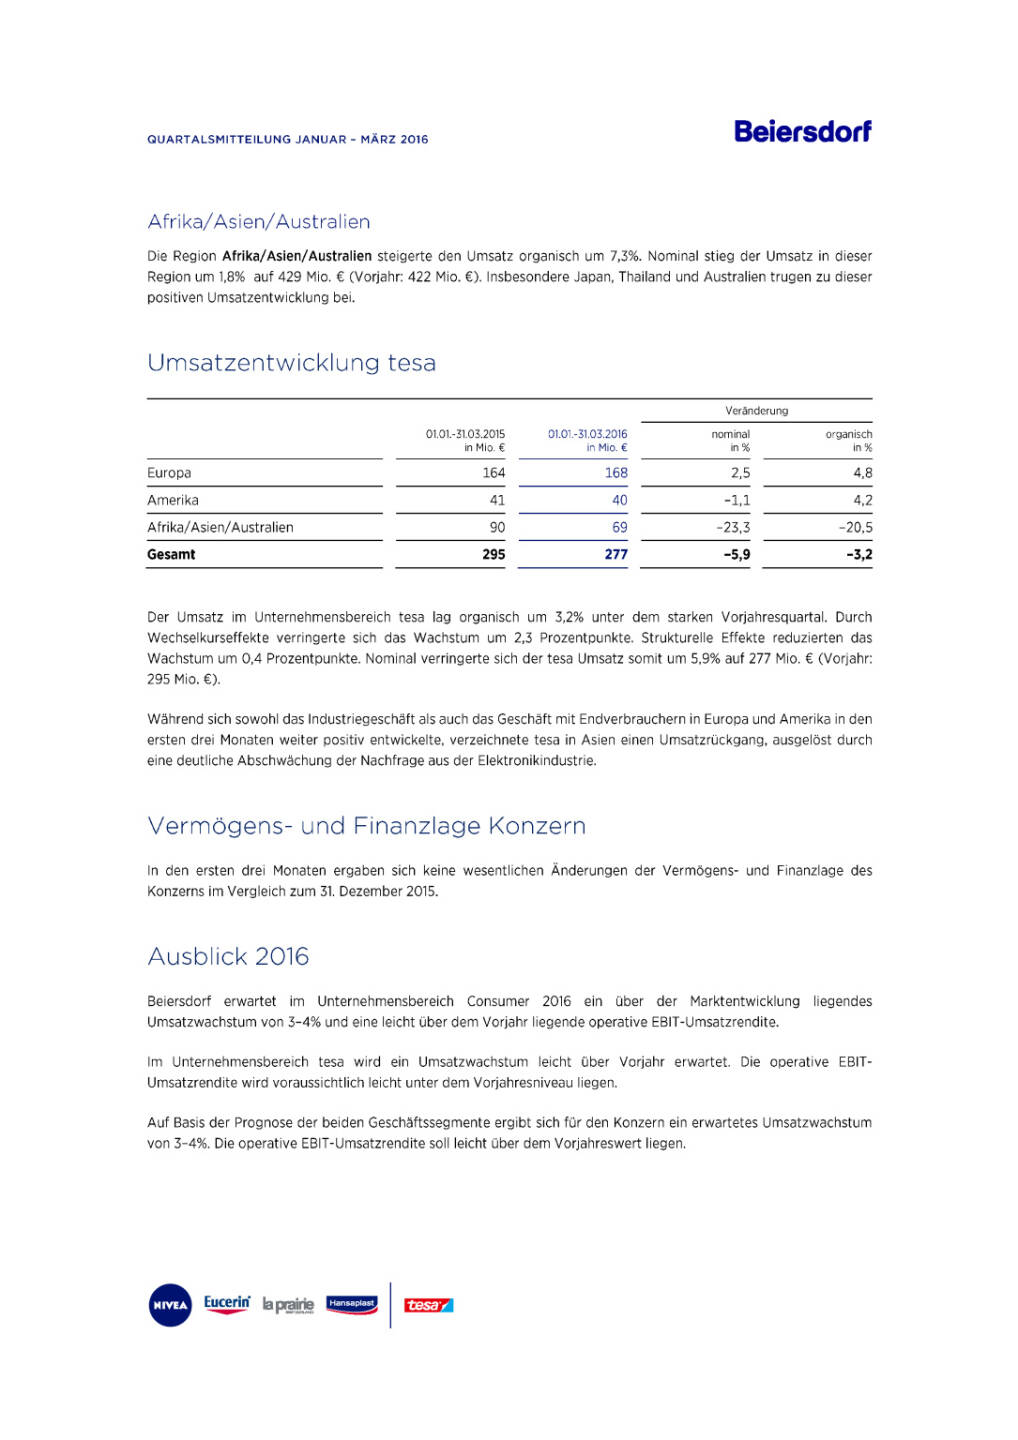 Beiersdorf Ergebnisse Q 1 2016, Seite 3/4, komplettes Dokument unter http://boerse-social.com/static/uploads/file_1002_beiersdorf_ergebnisse_q_1_2016.pdf